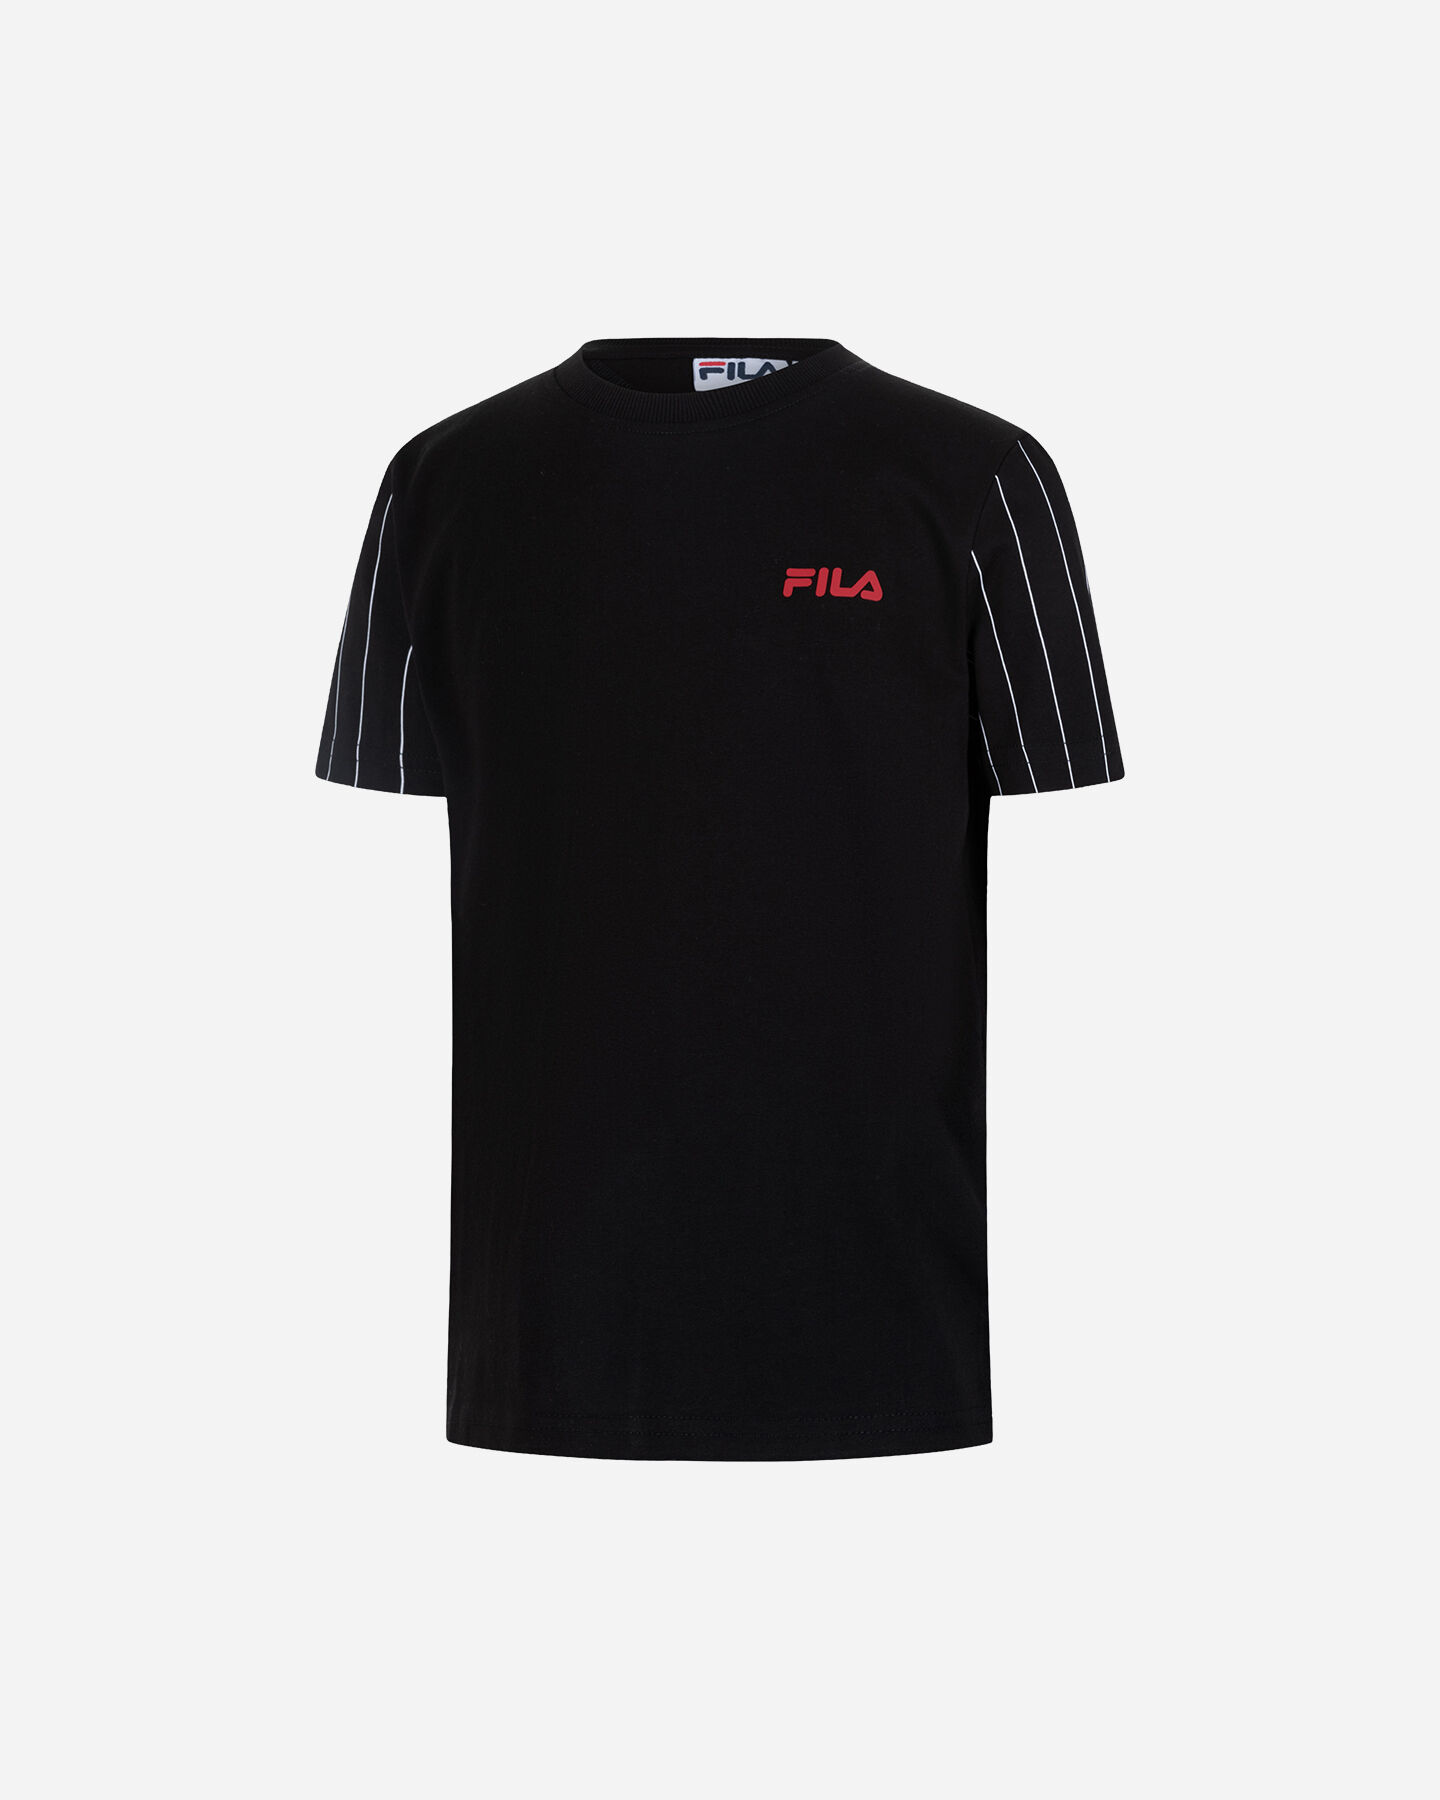  T-Shirt FILA BORN ROCK COLLECTION JR S4124919|050|6A scatto 0